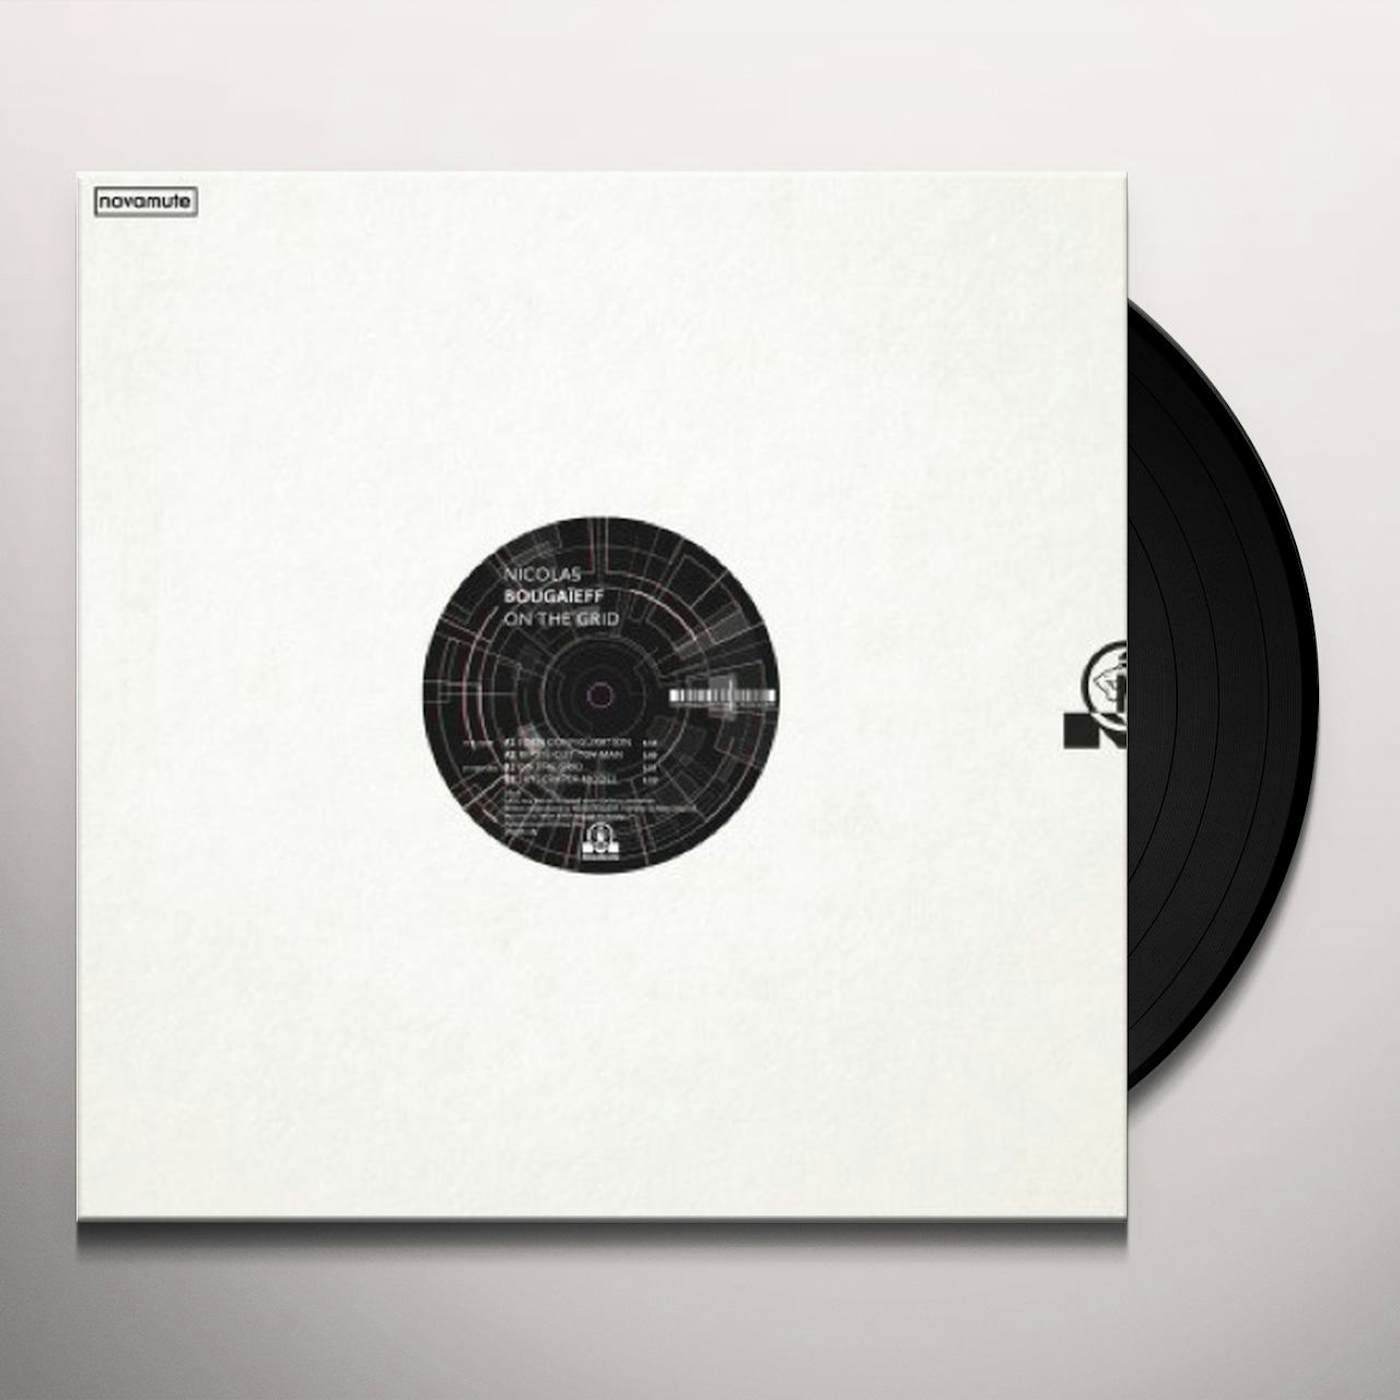 Nicolas Bougaïeff On The Grid Vinyl Record